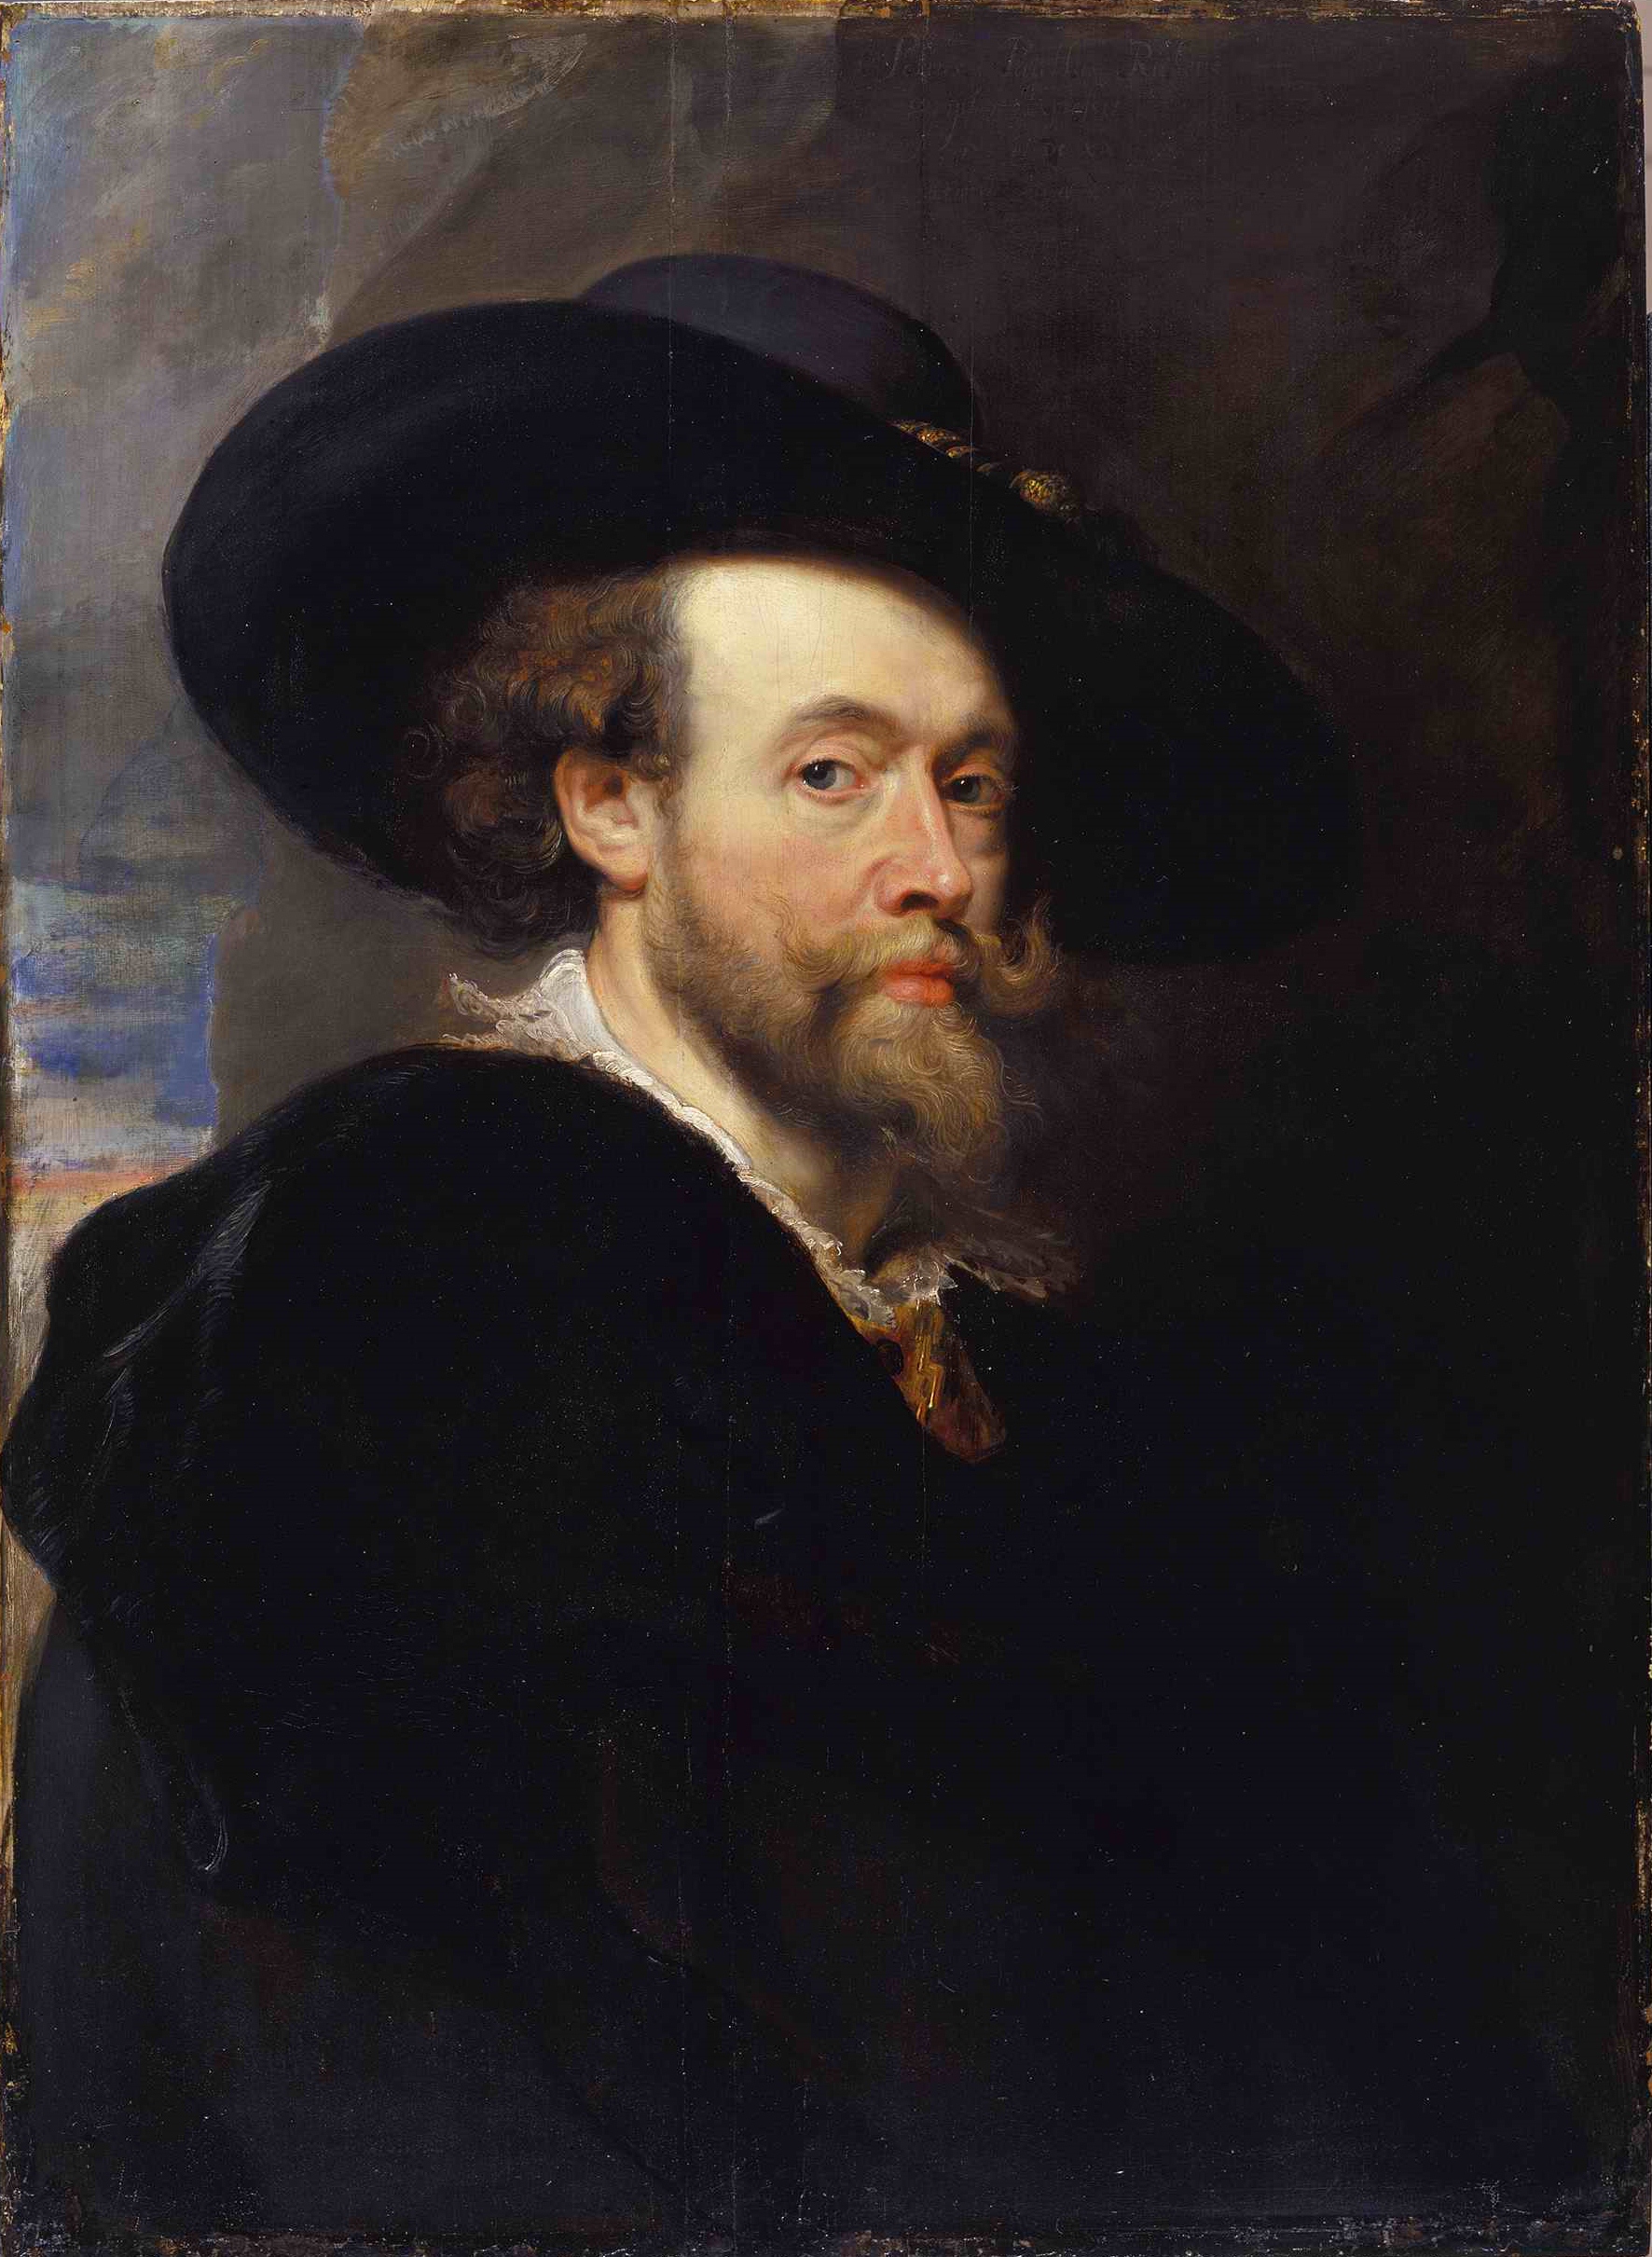 Rubens_Self-portrait_1623.jpg